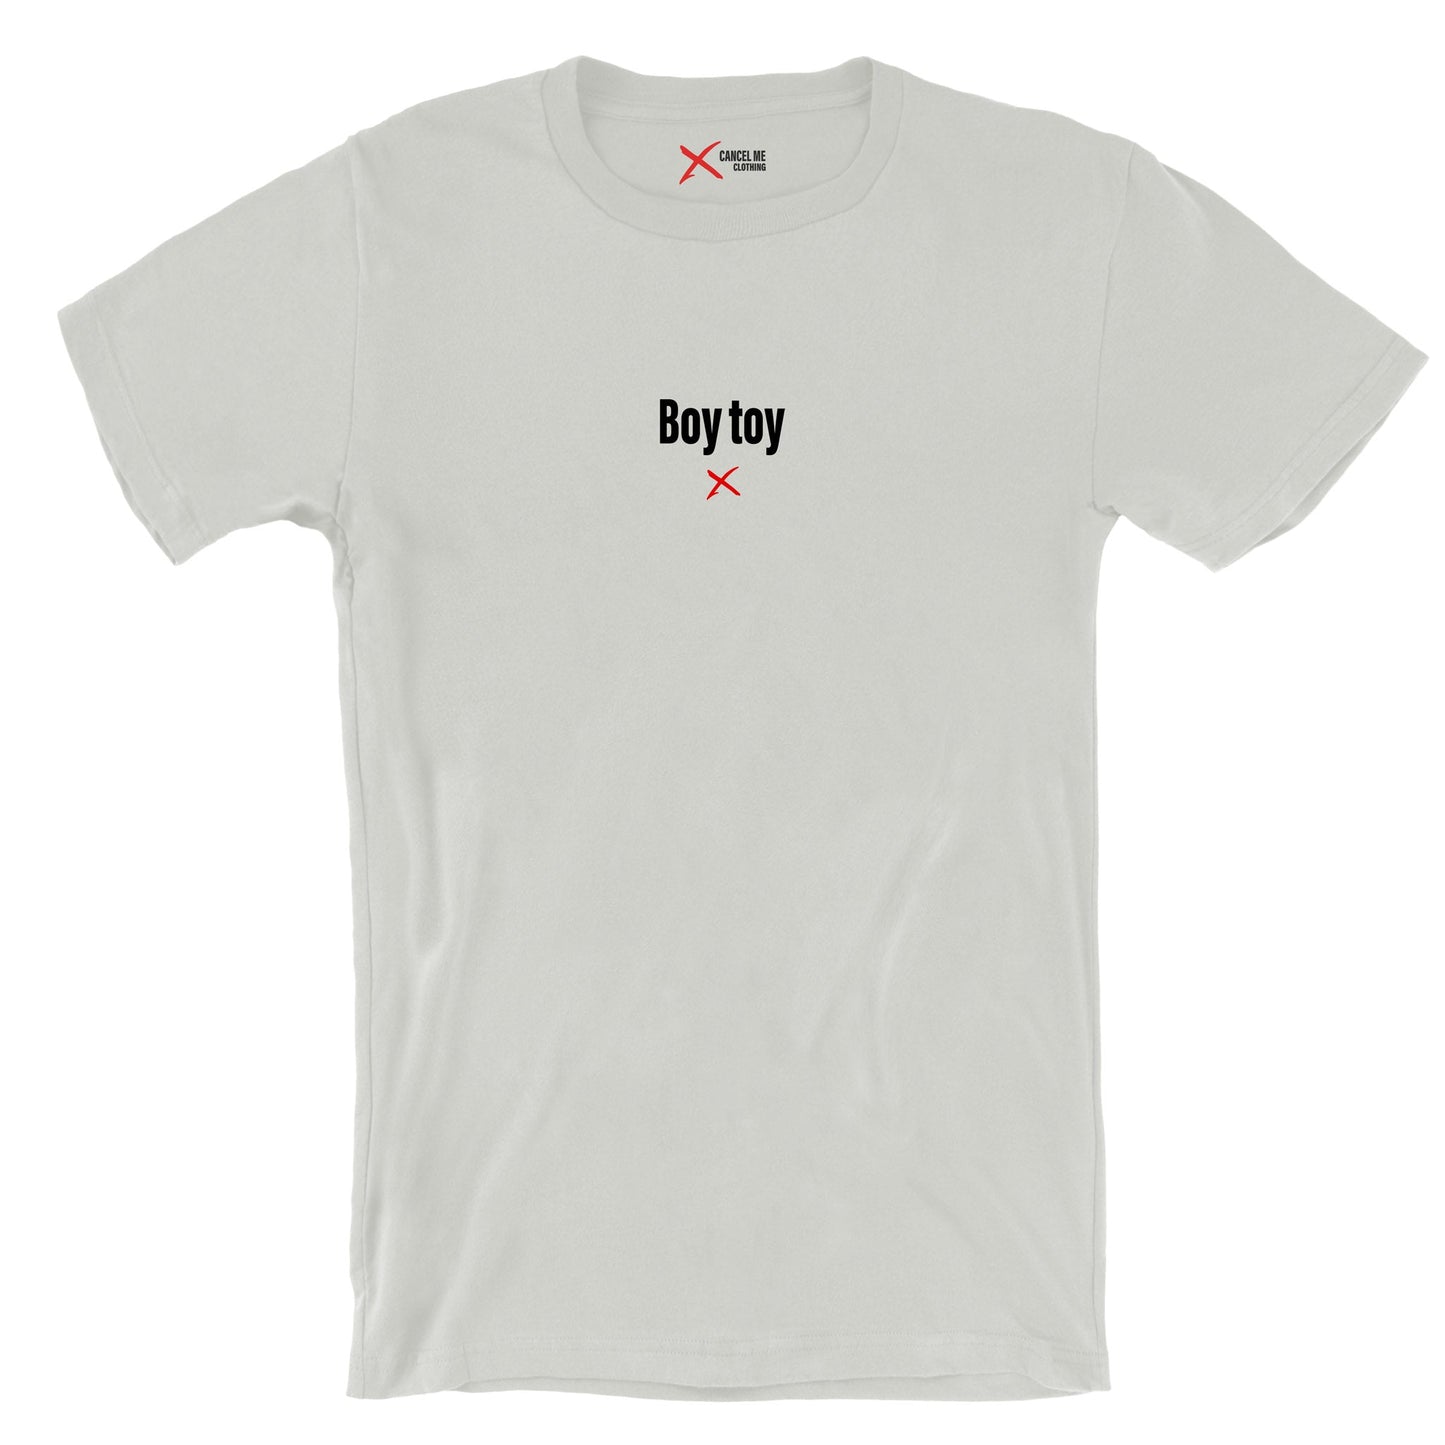 Boy toy - Shirt